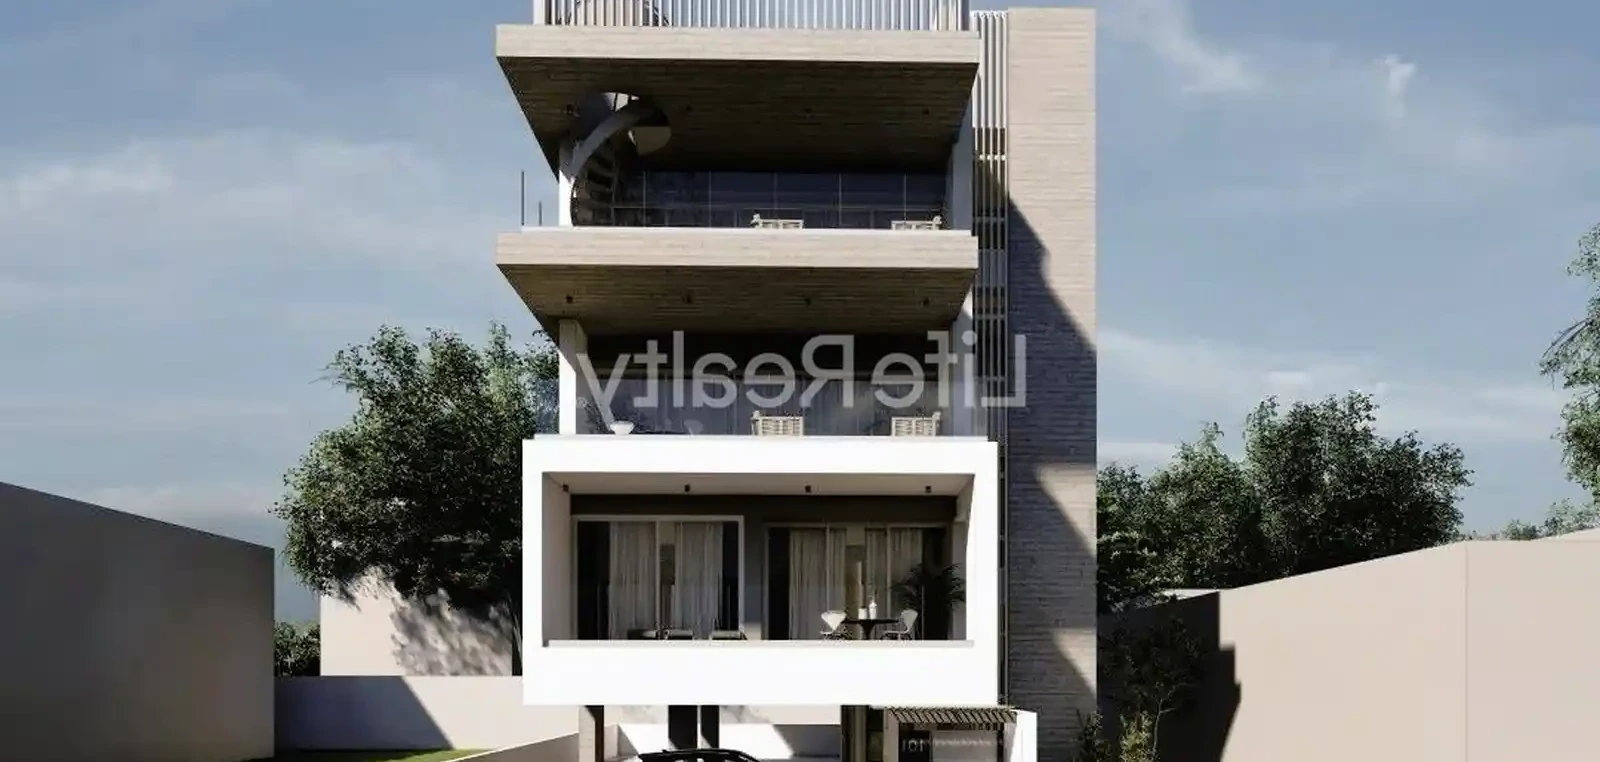 2-bedroom penthouse fоr sаle €458.900, image 1